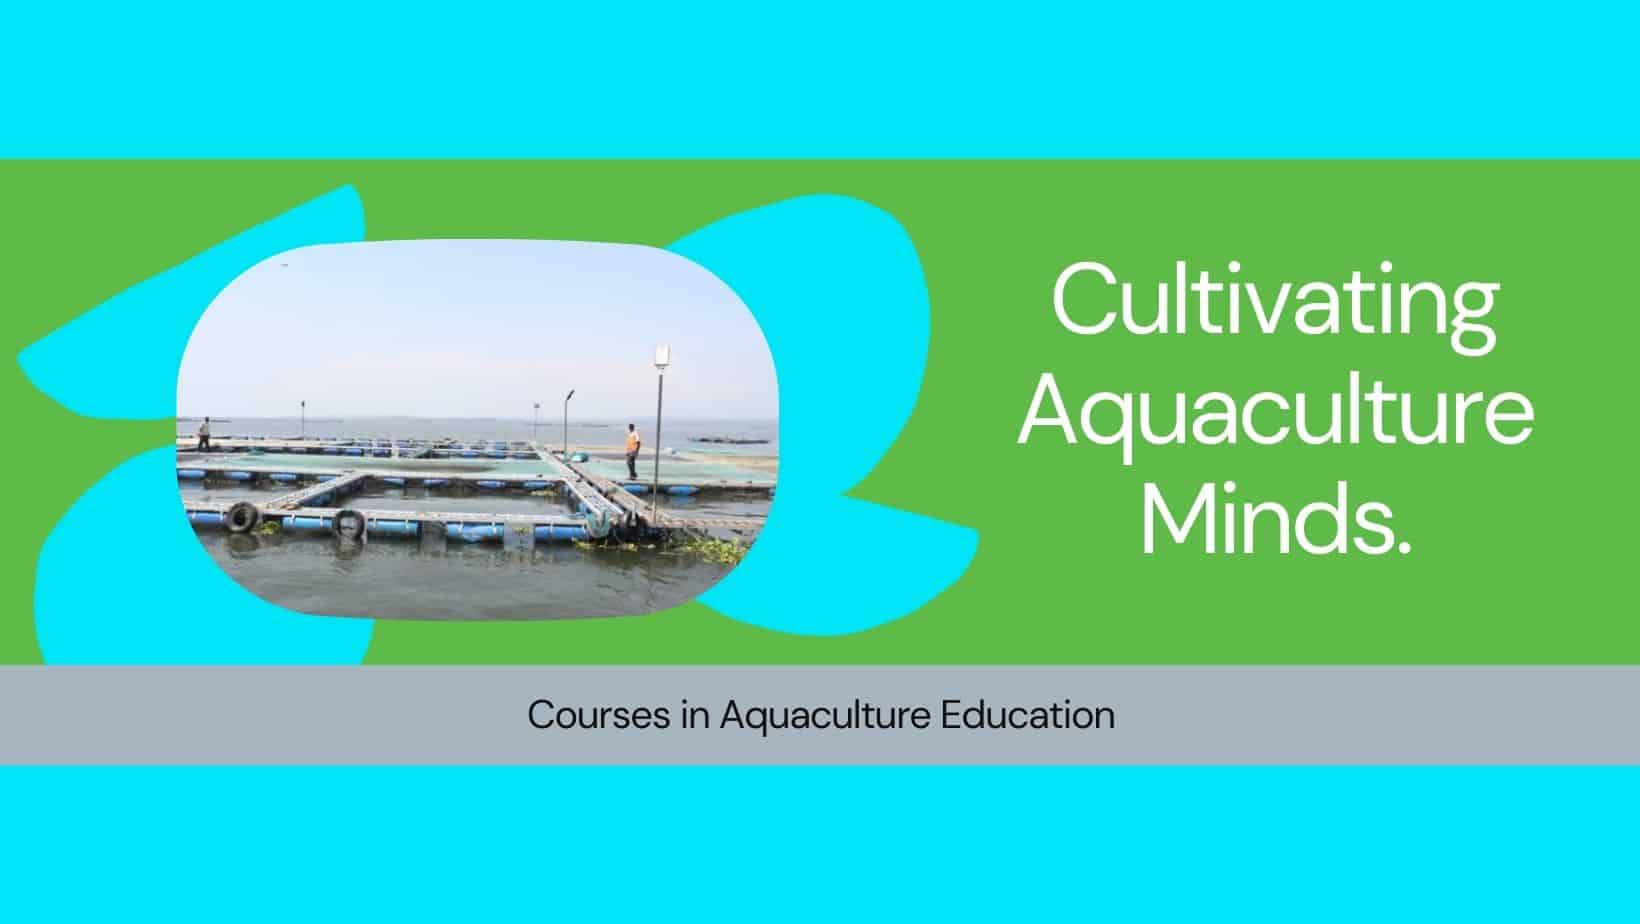 Courses in Aquaculture Education